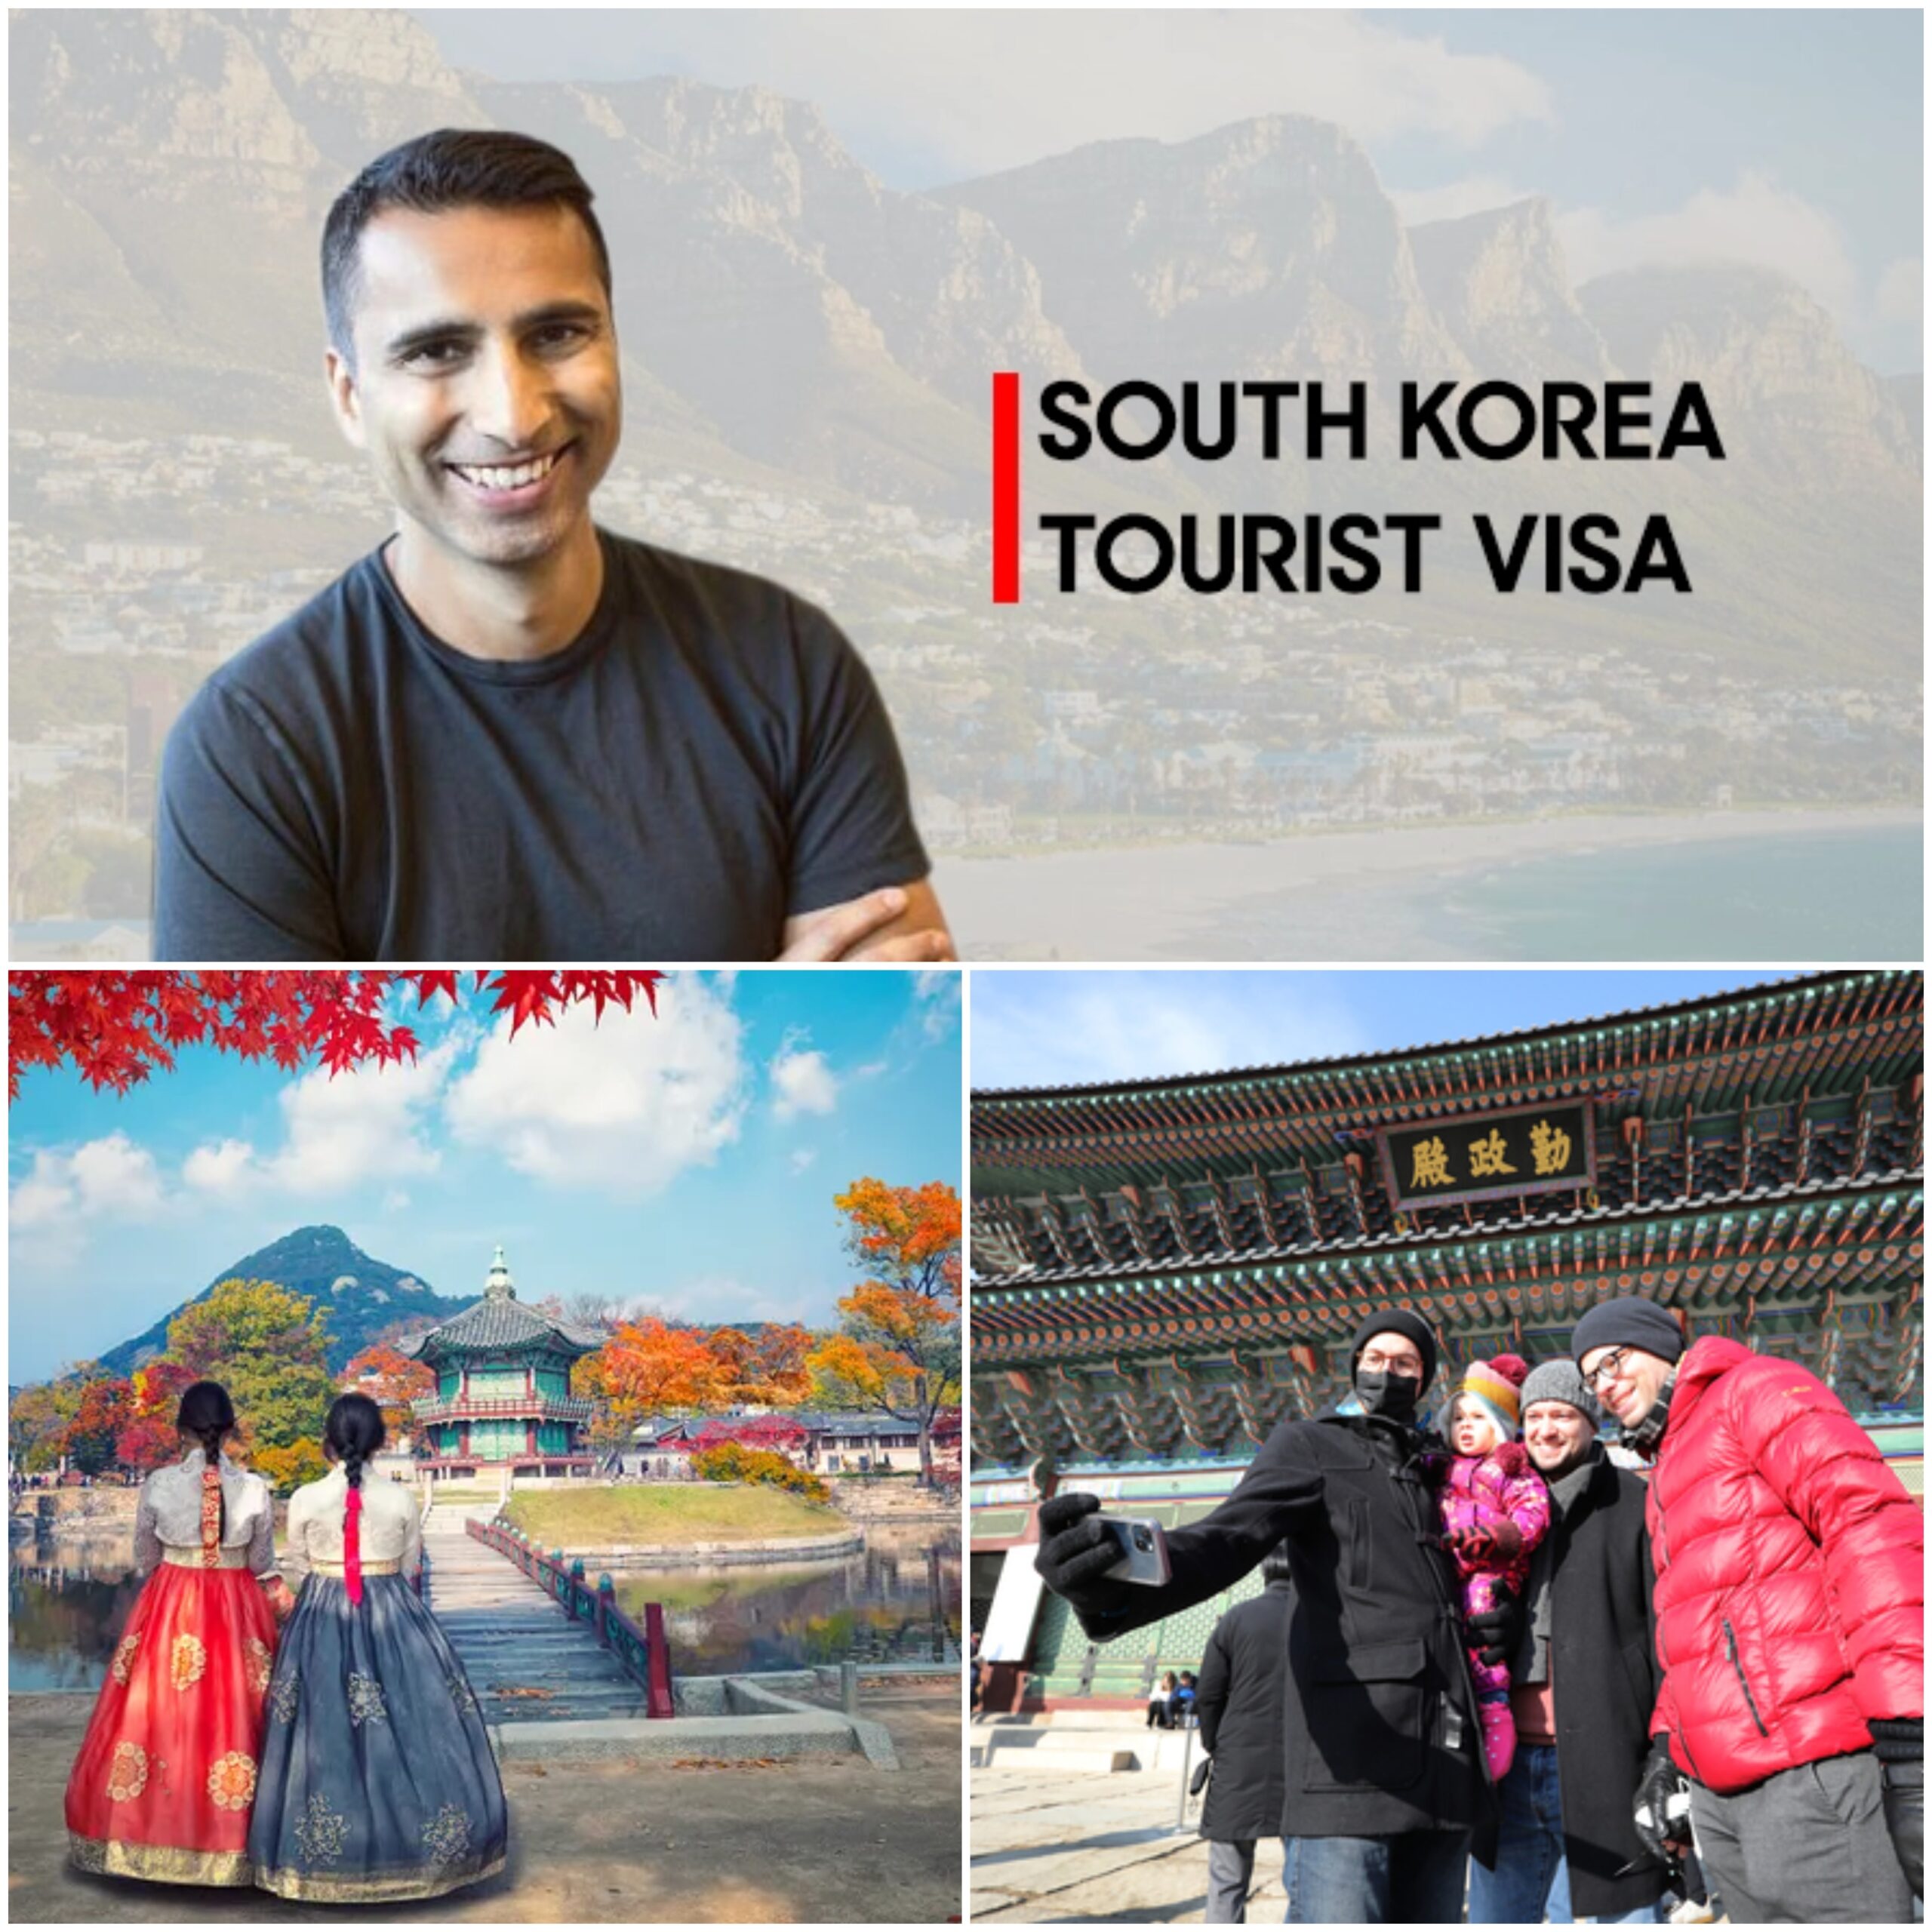 South Korea tourist visa